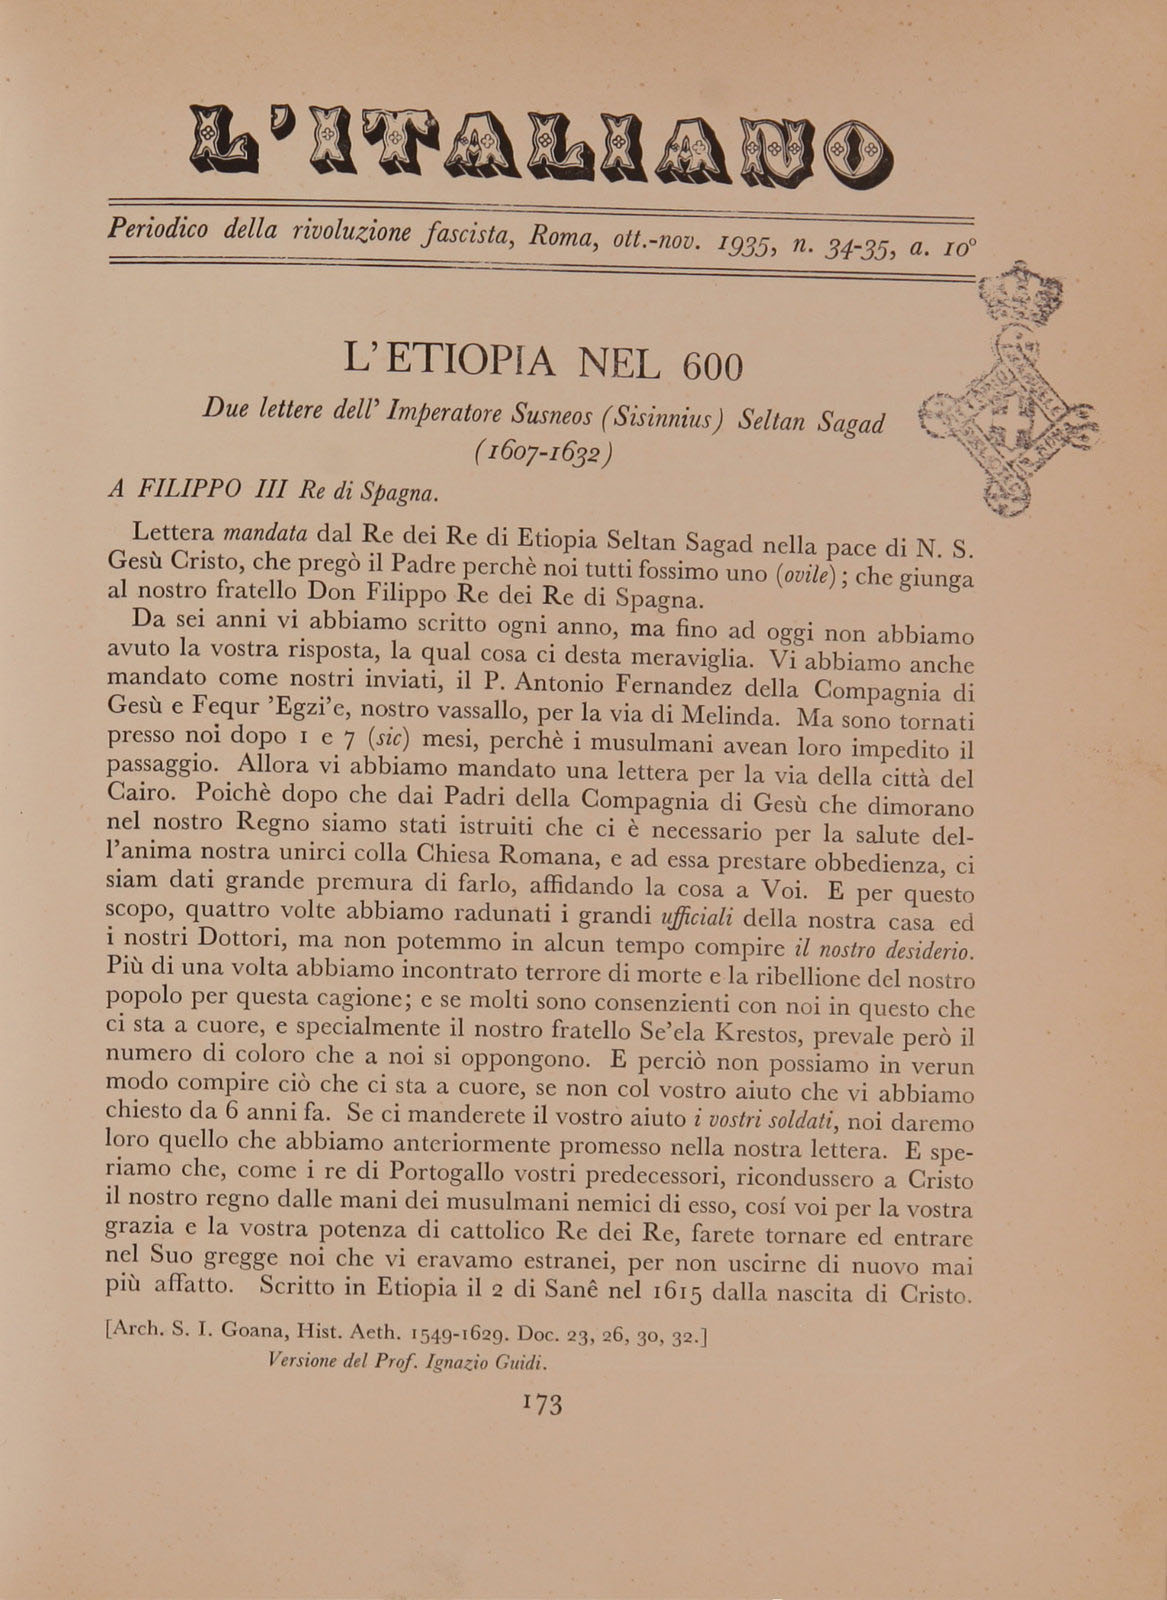 L'Italiano - 10 (1935), n. 34-35, pp. 202-207